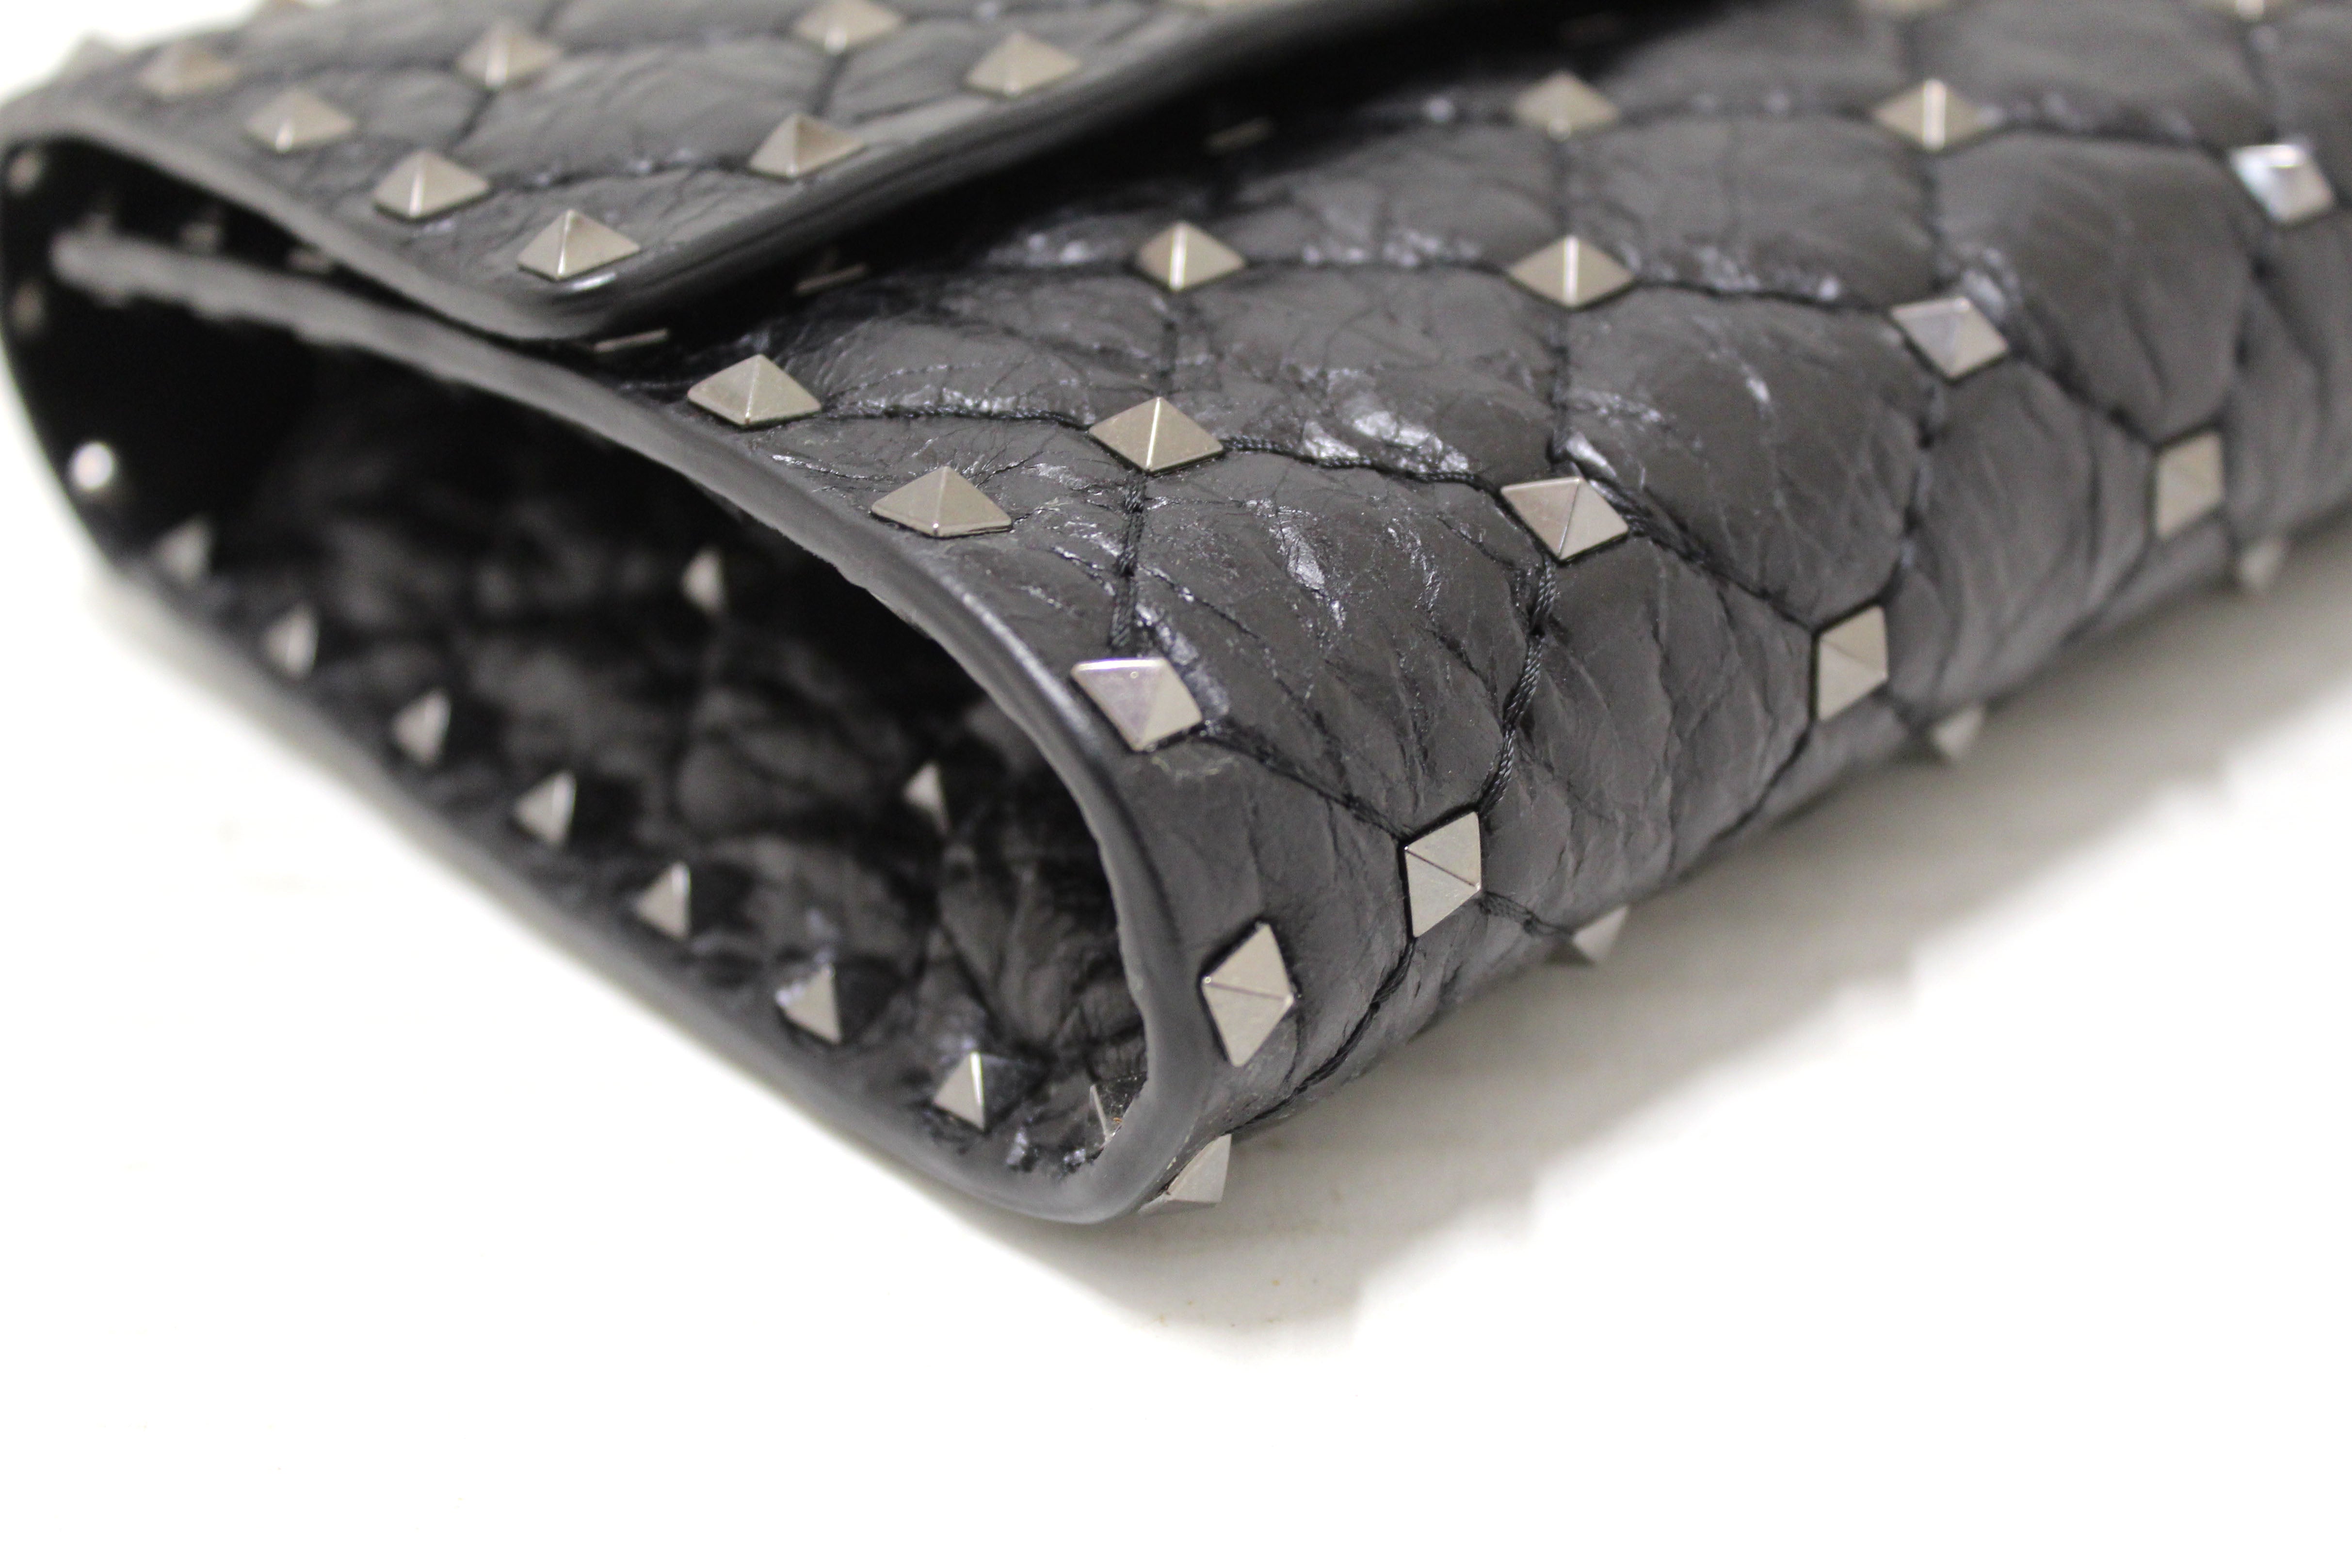 Authentic Valentino Garavani Black Quilted Nappa Leather Rockstud Spike Crossbody Clutch Bag